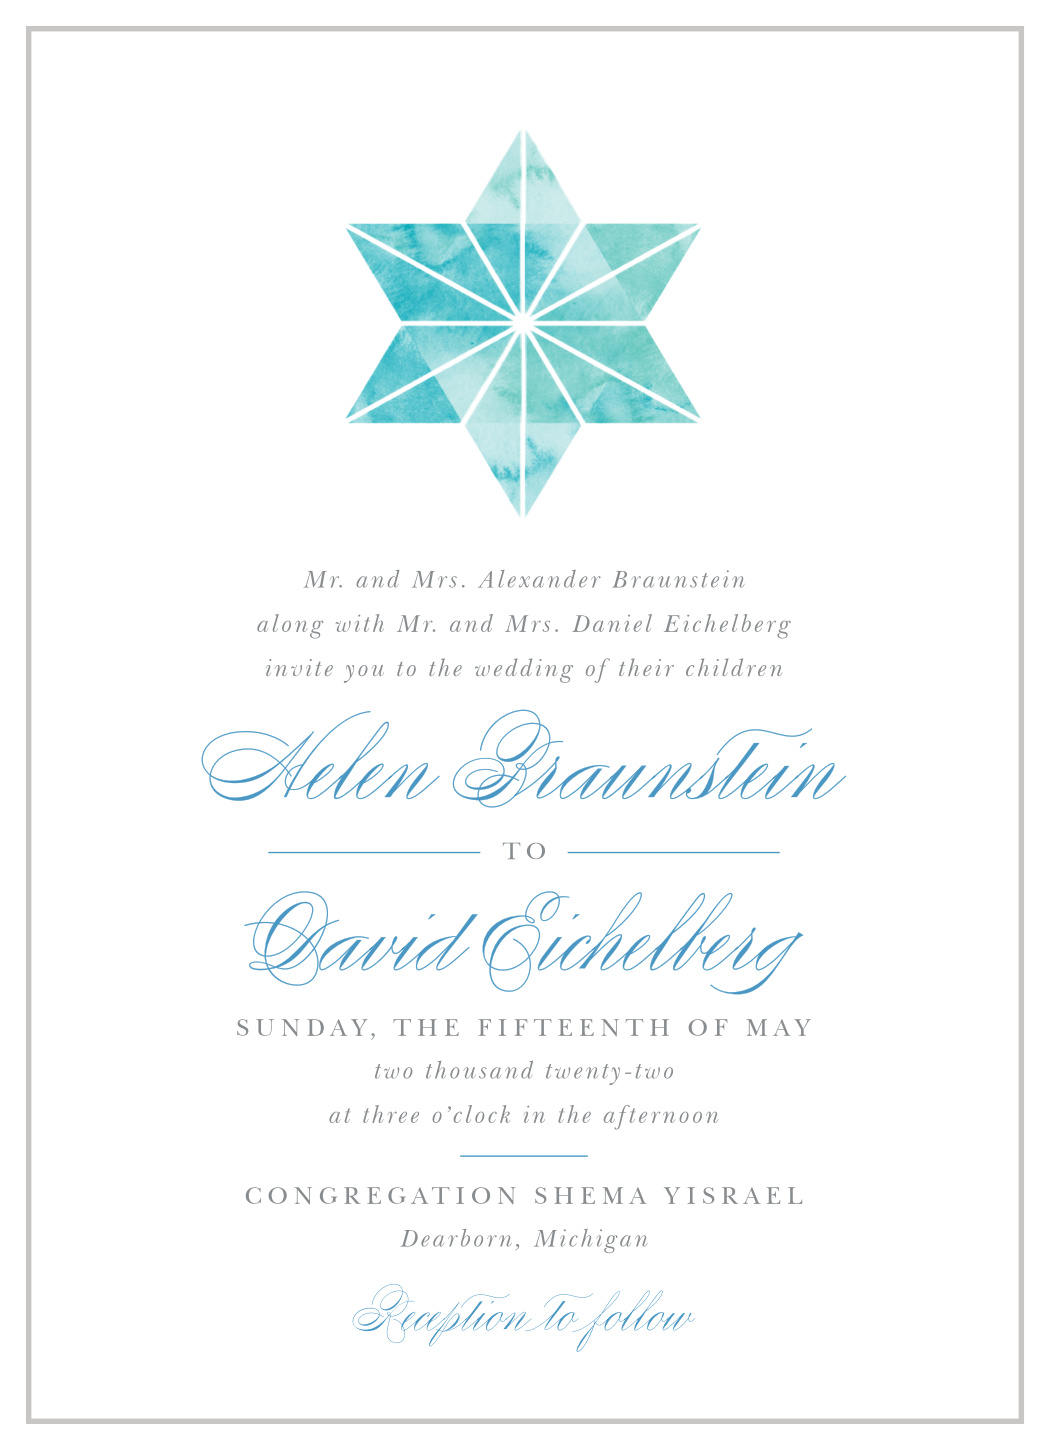 Watercolor Star Wedding Invitations